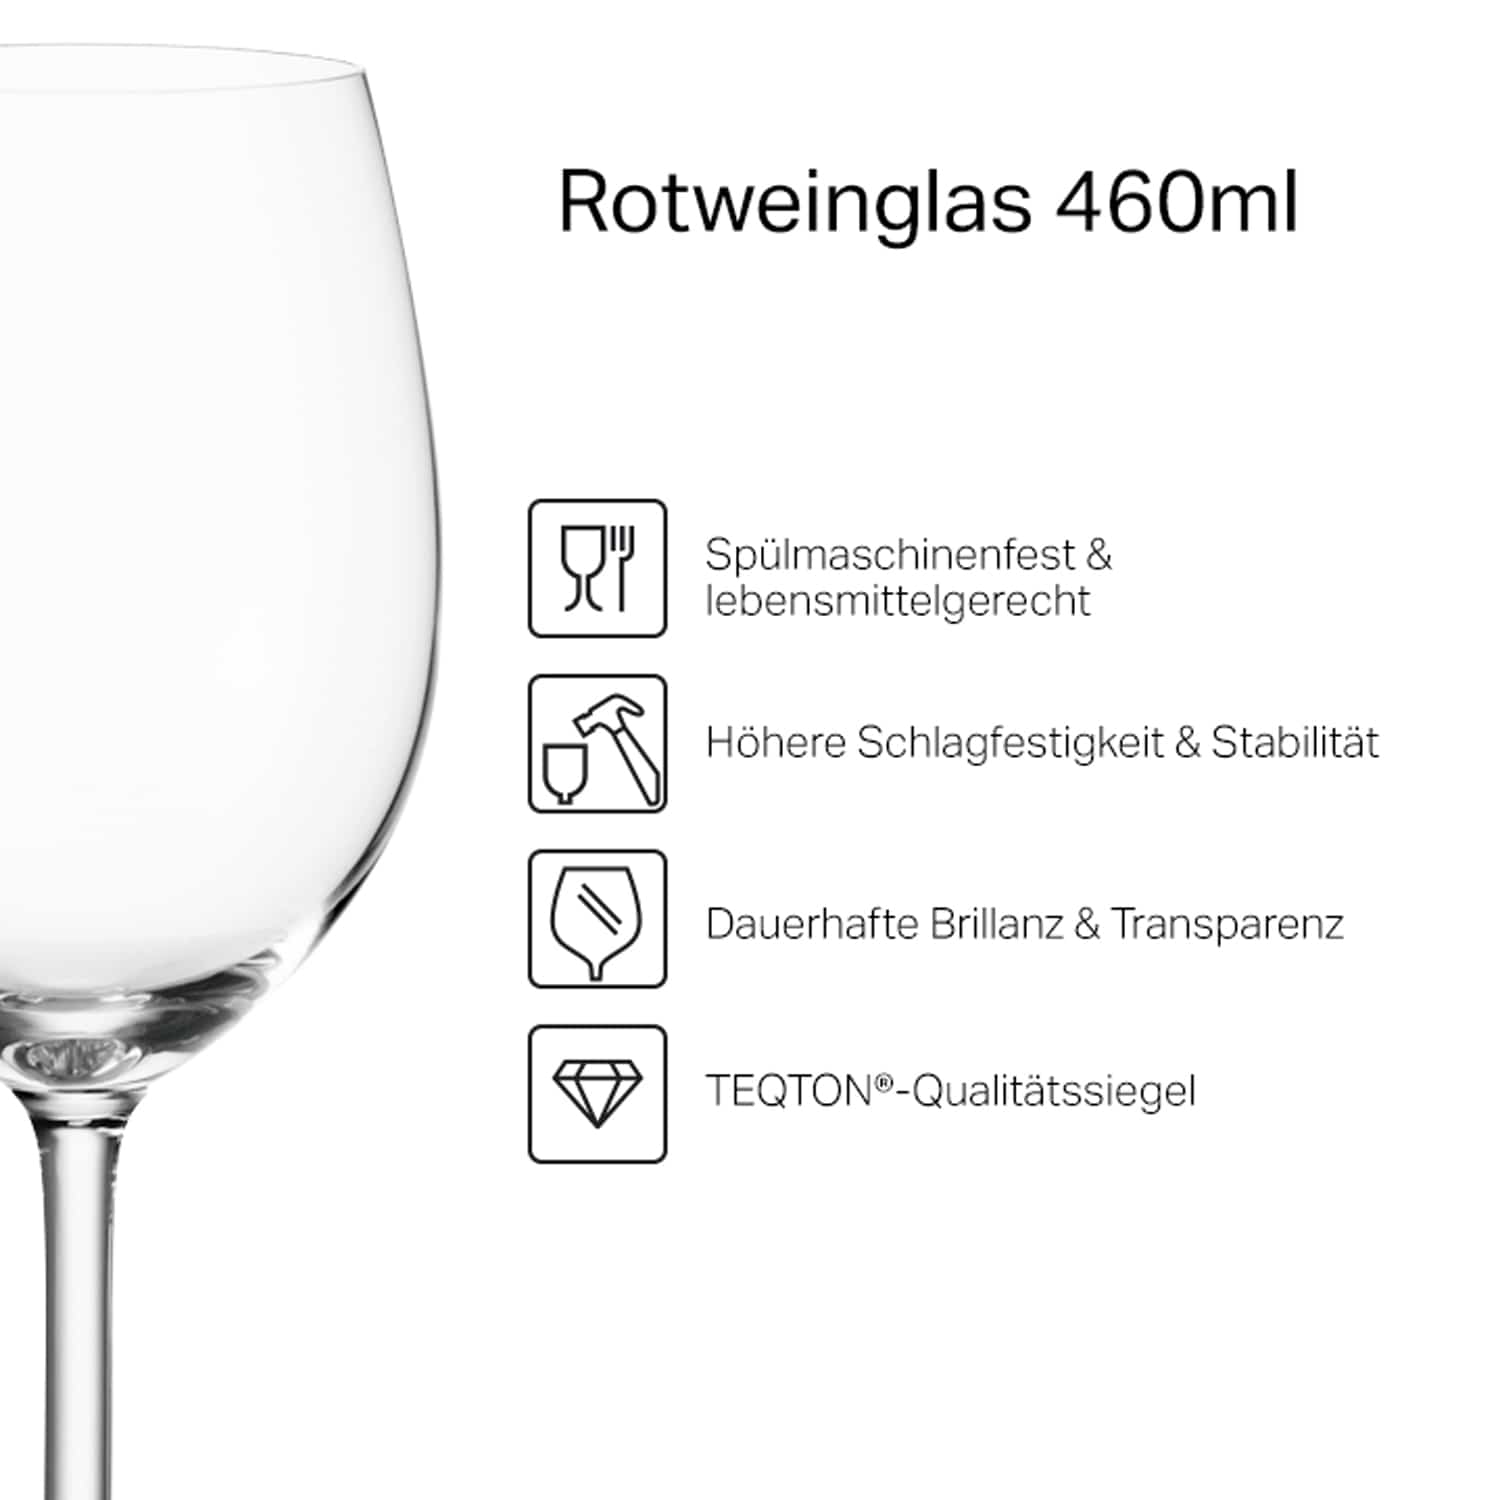 Leonardo Rotweinglas DAILY 460ml "Guter Tag, Schlechter Tag, FRAG NICHT!"